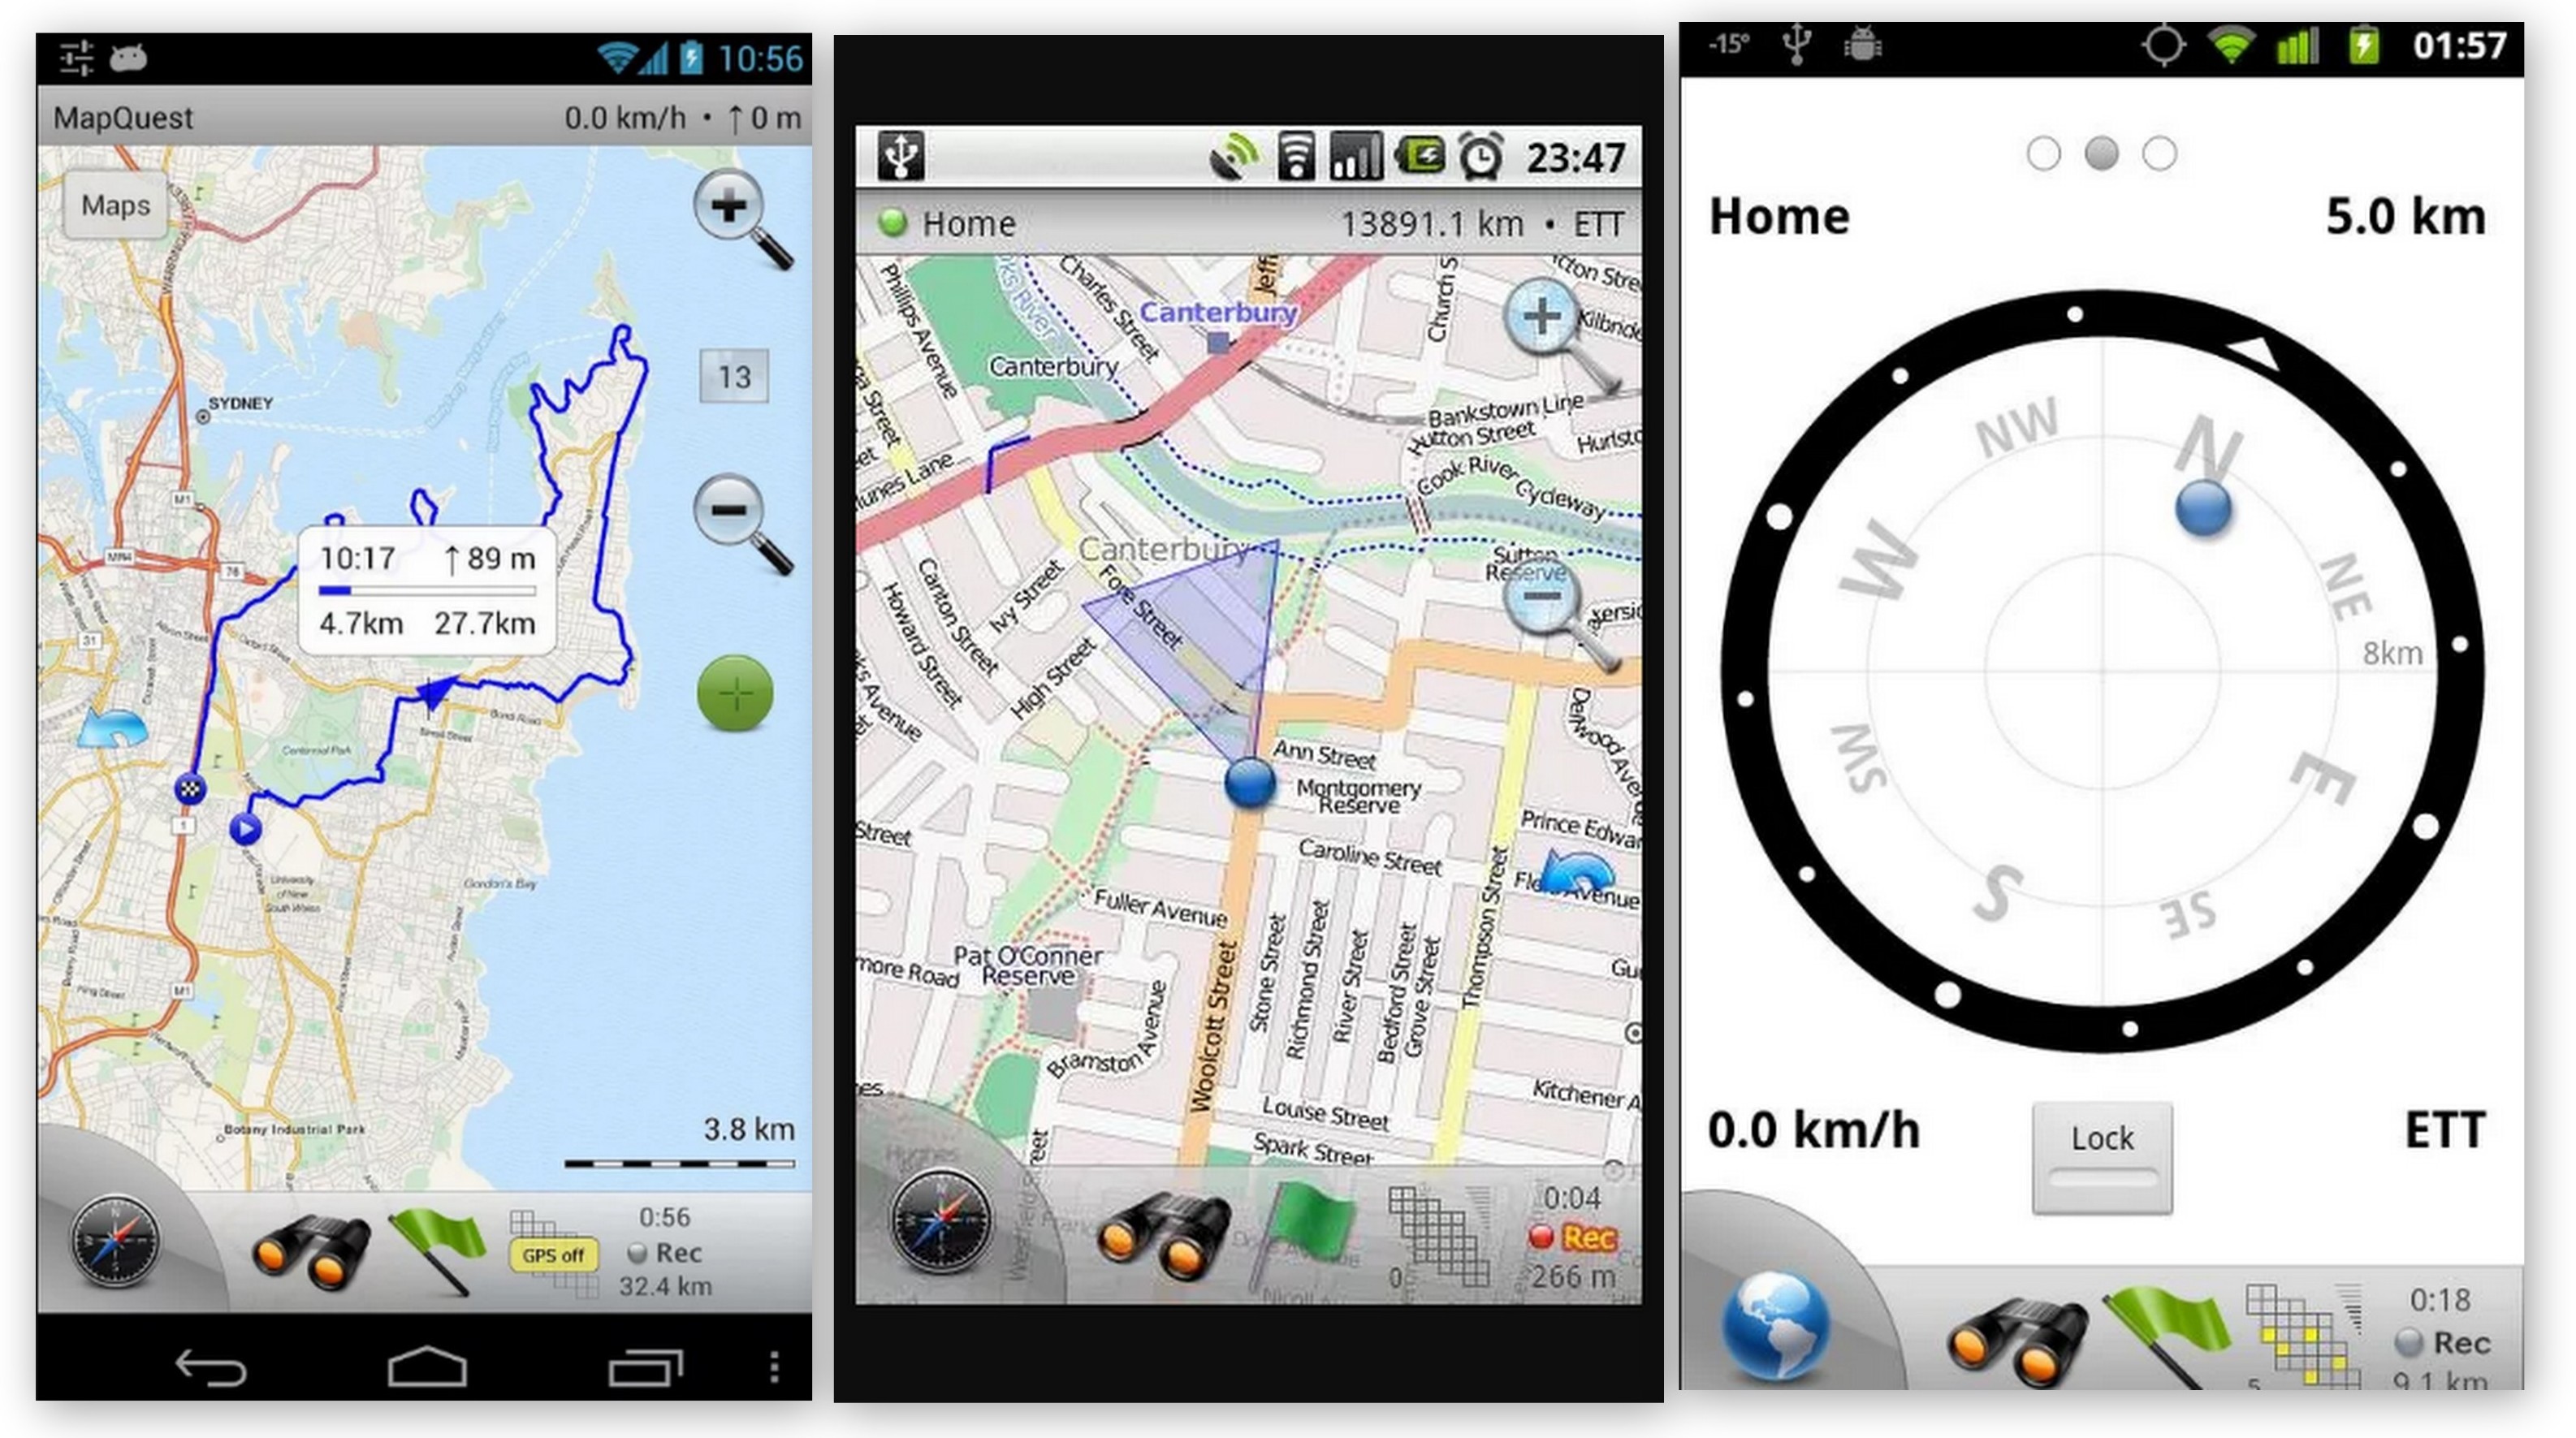 offline navigation app